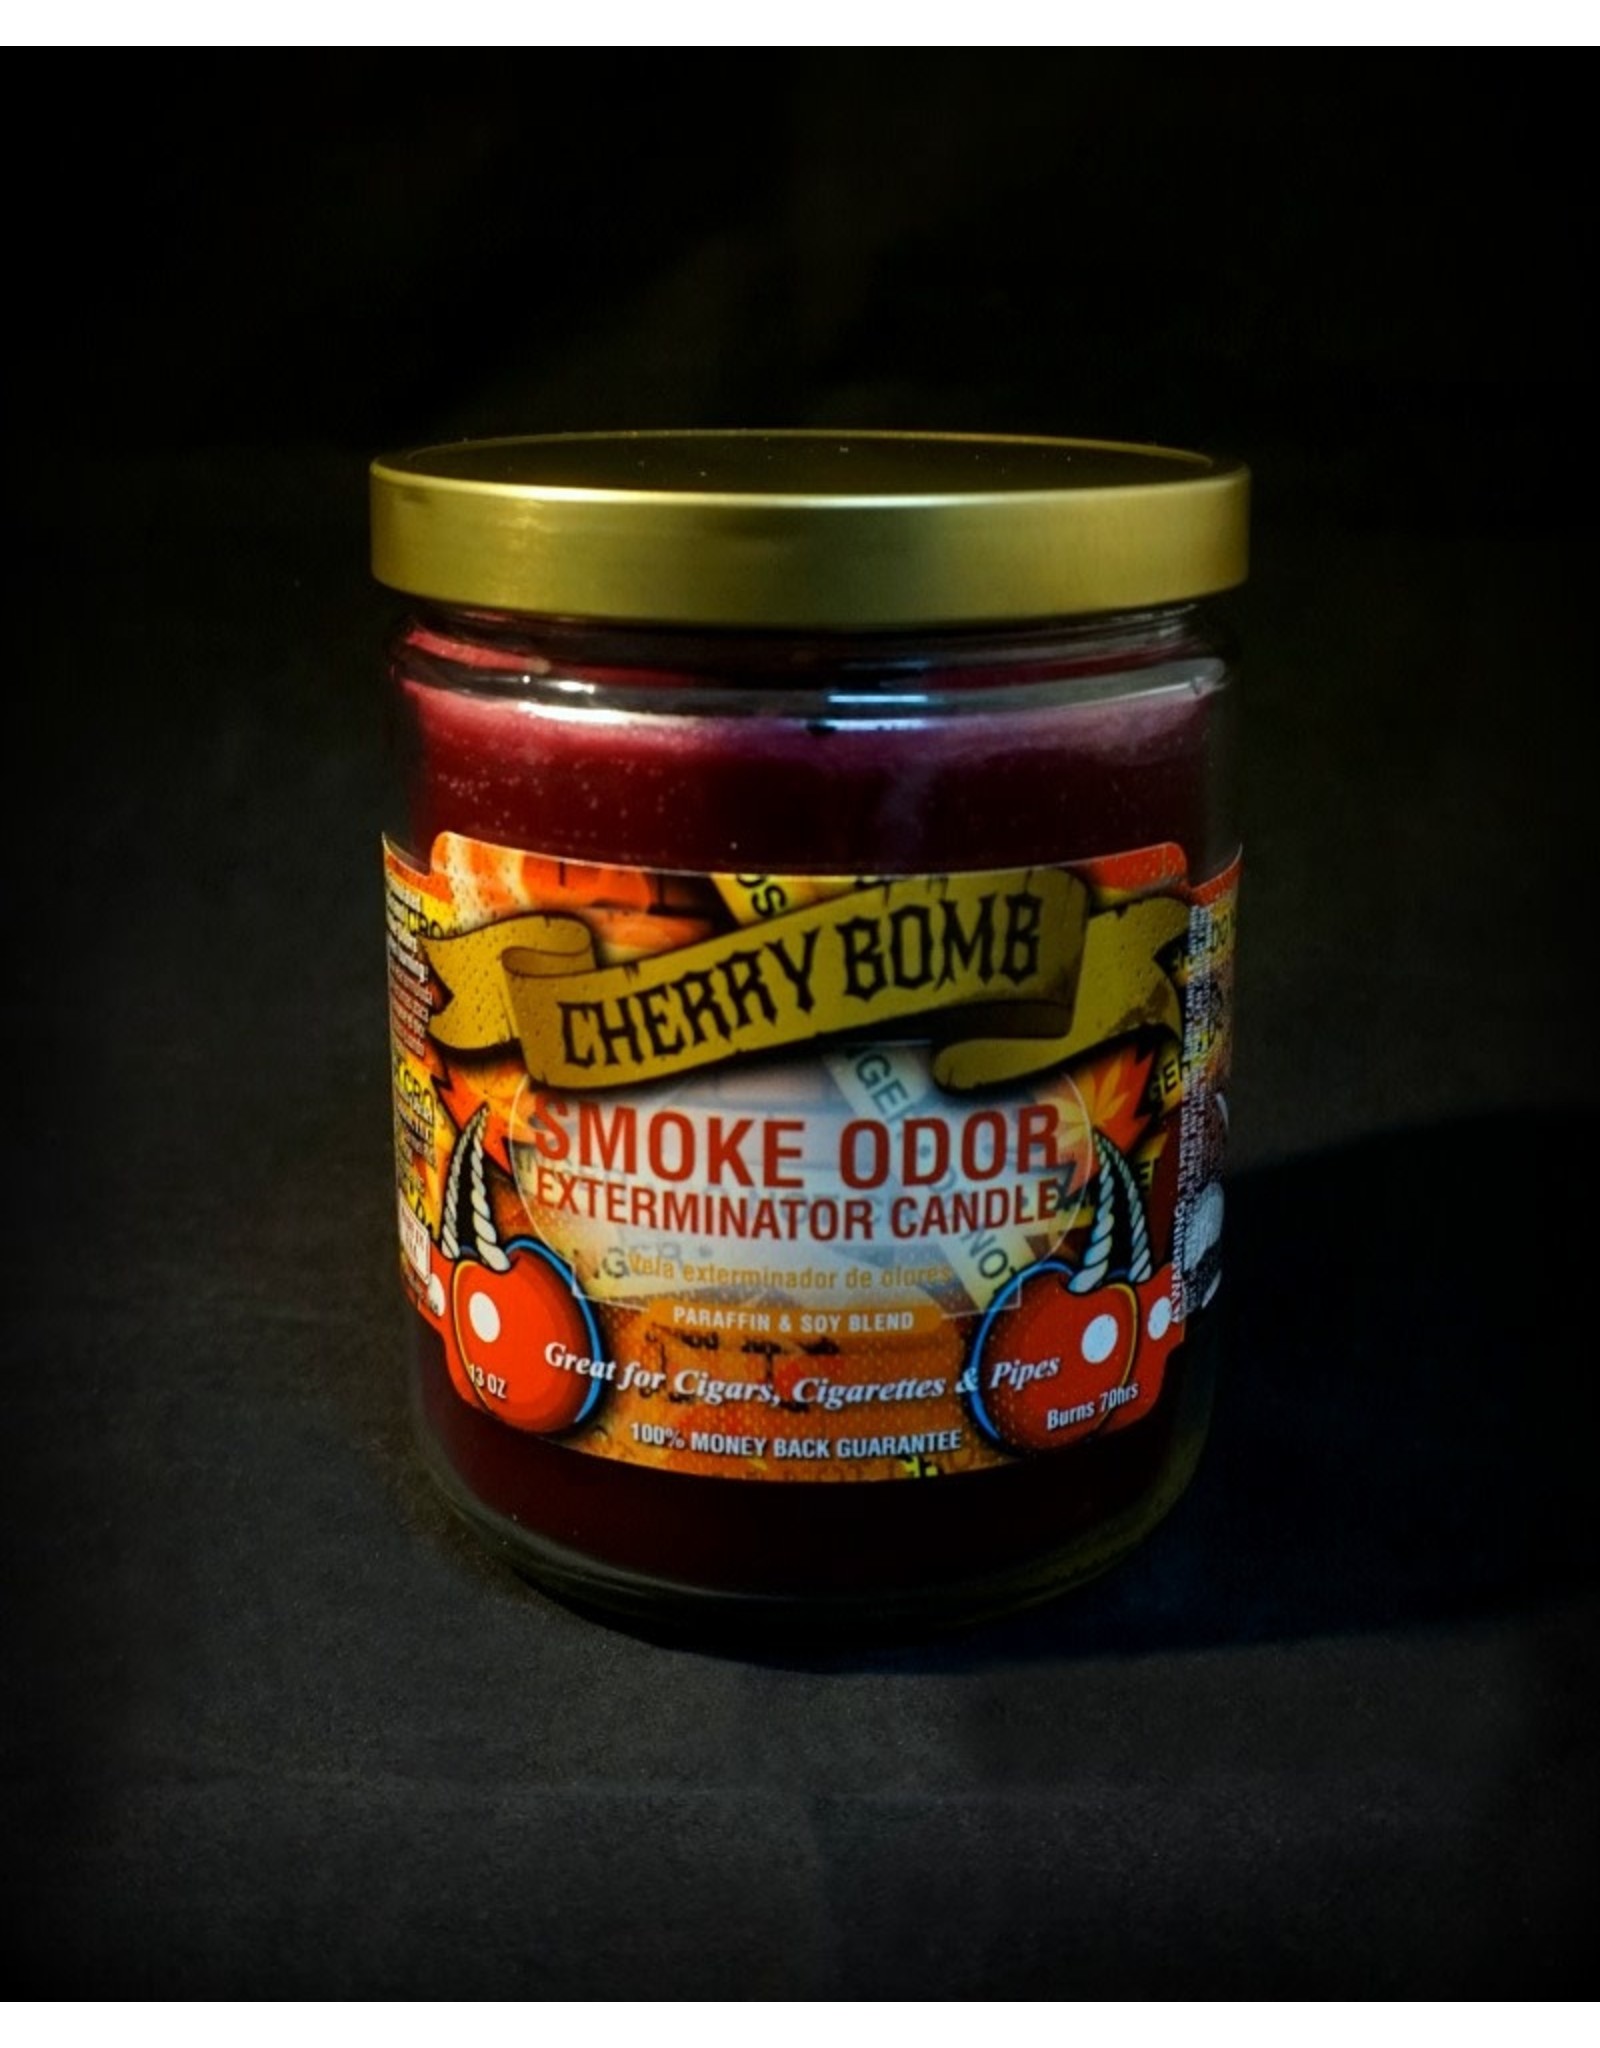 Smoke Odor Smoke Odor Candle - Cherry Bomb